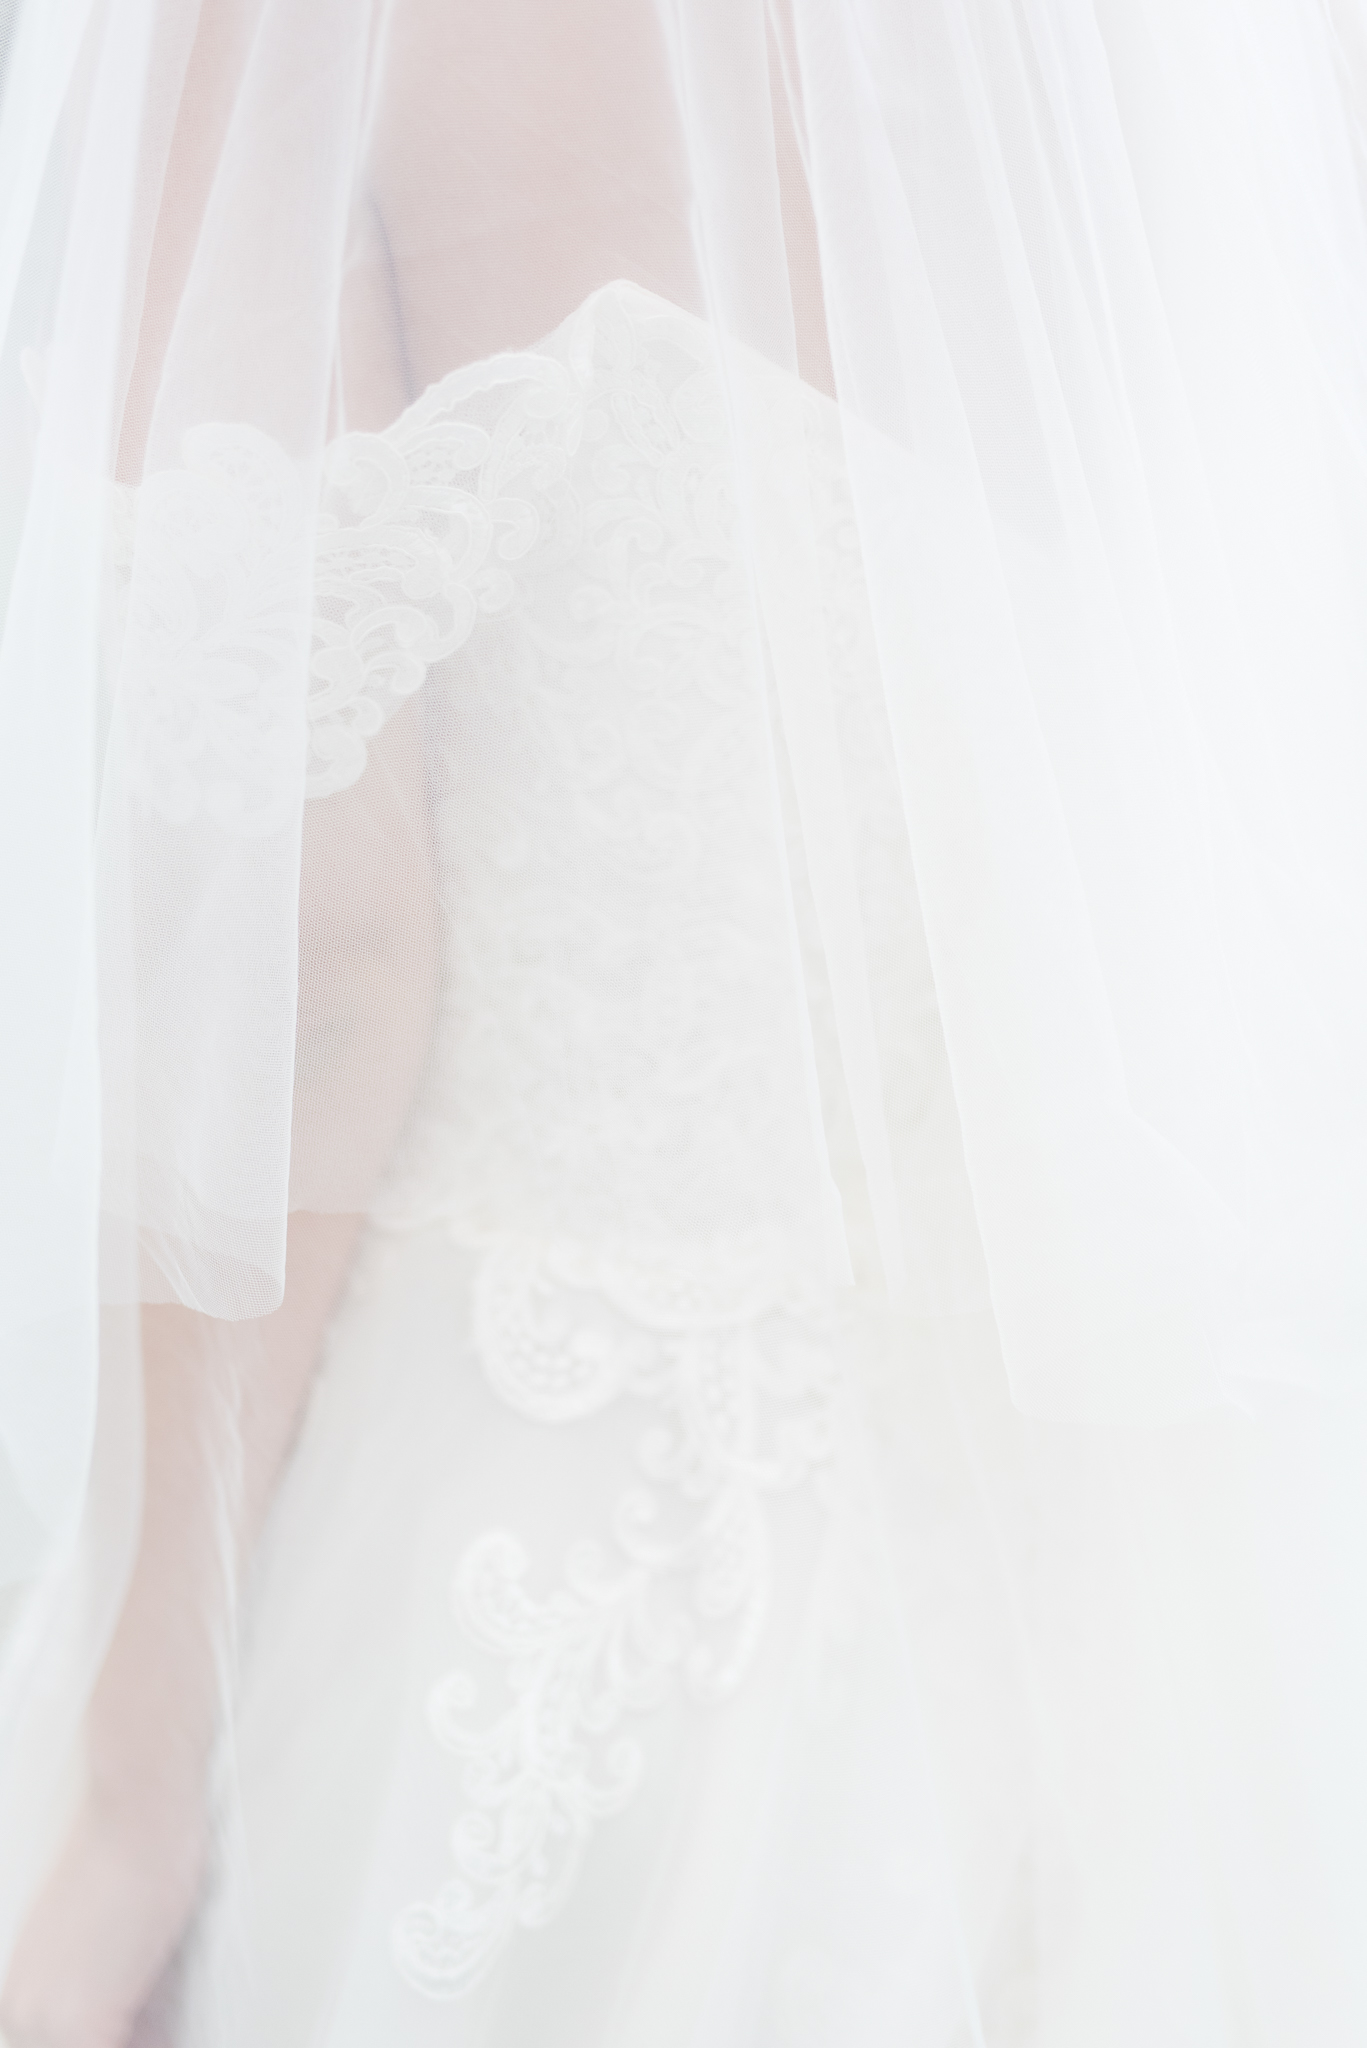 Veil and bridal dress.